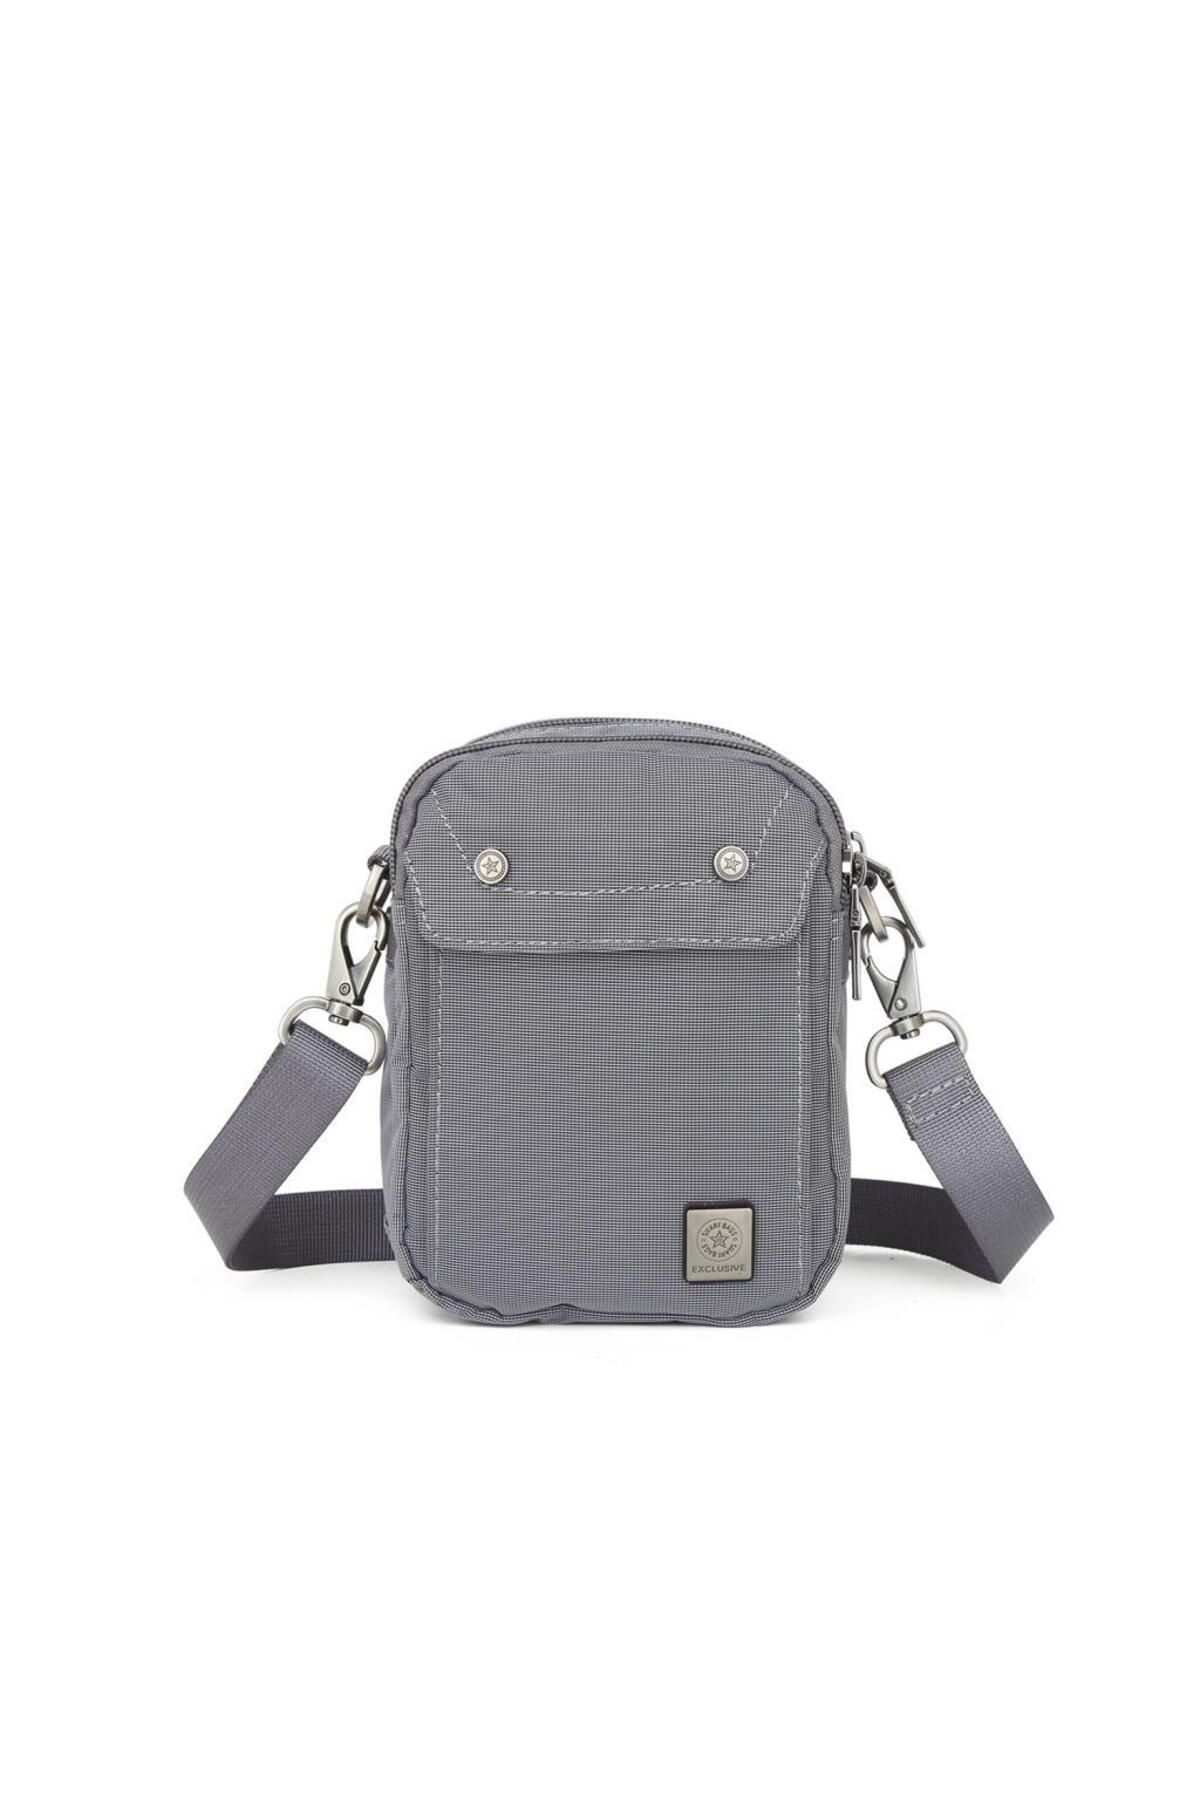 Smart Bags Exclusive Serisi Uniseks Postacı Çantası Smart Bags 8704